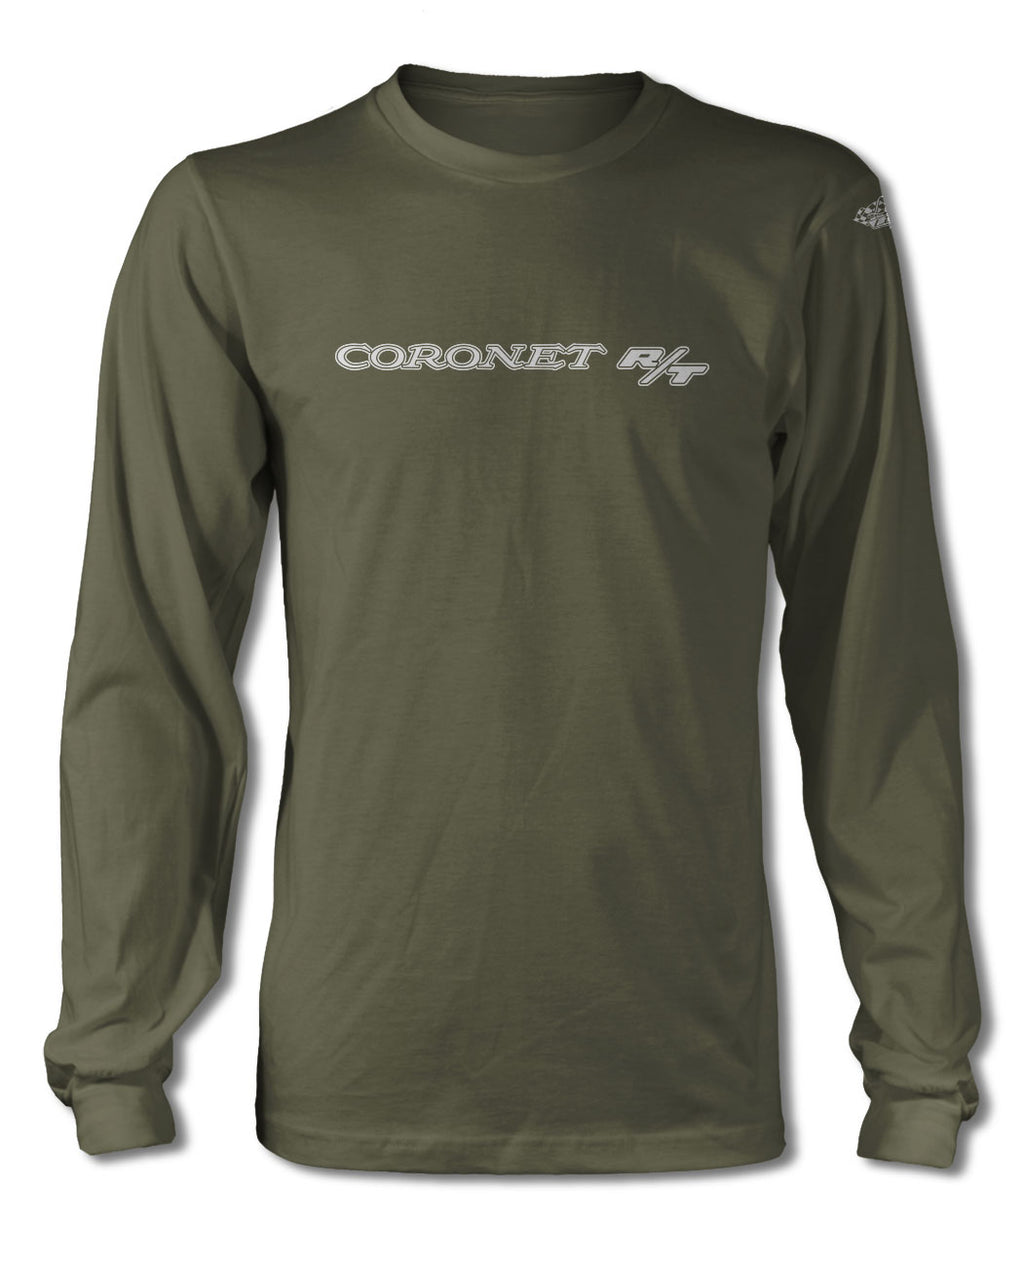 Dodge Coronet RT 1969 - 1970 Emblem T-Shirt - Long Sleeves - Emblem